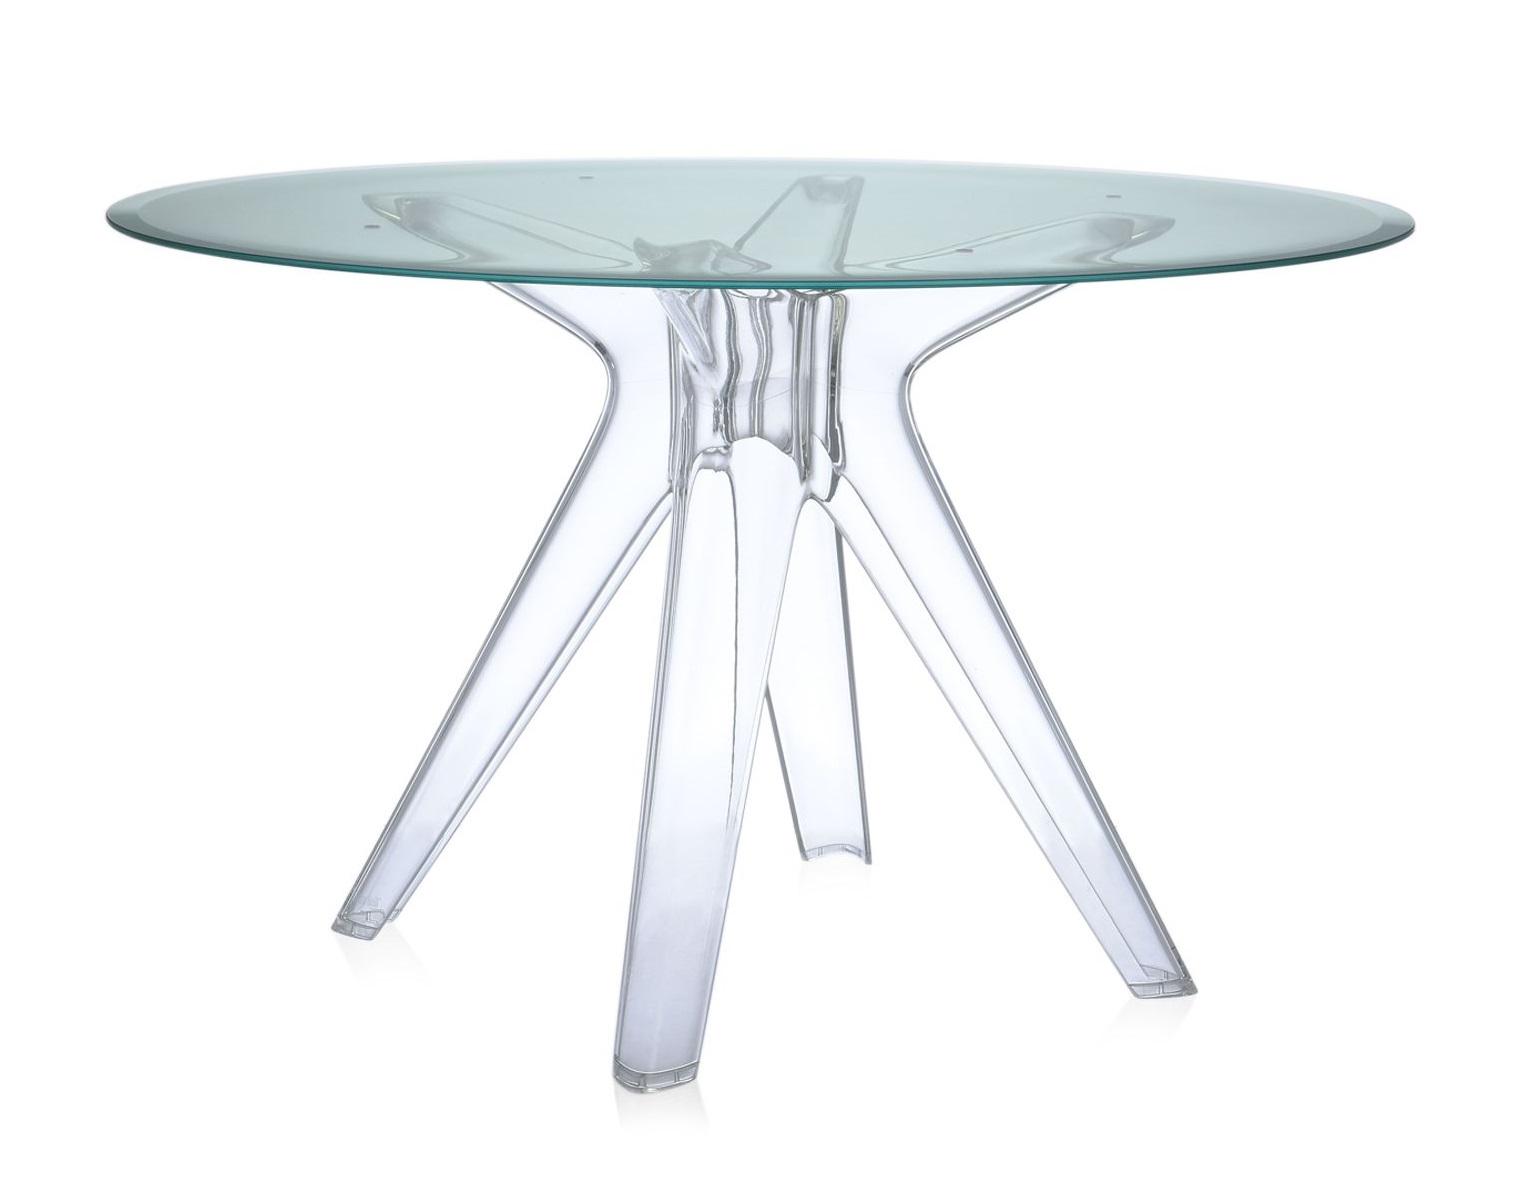 Masa Kartell Sir Gio design Philippe Starck diametru 120cm verde – transparent 120cm Living